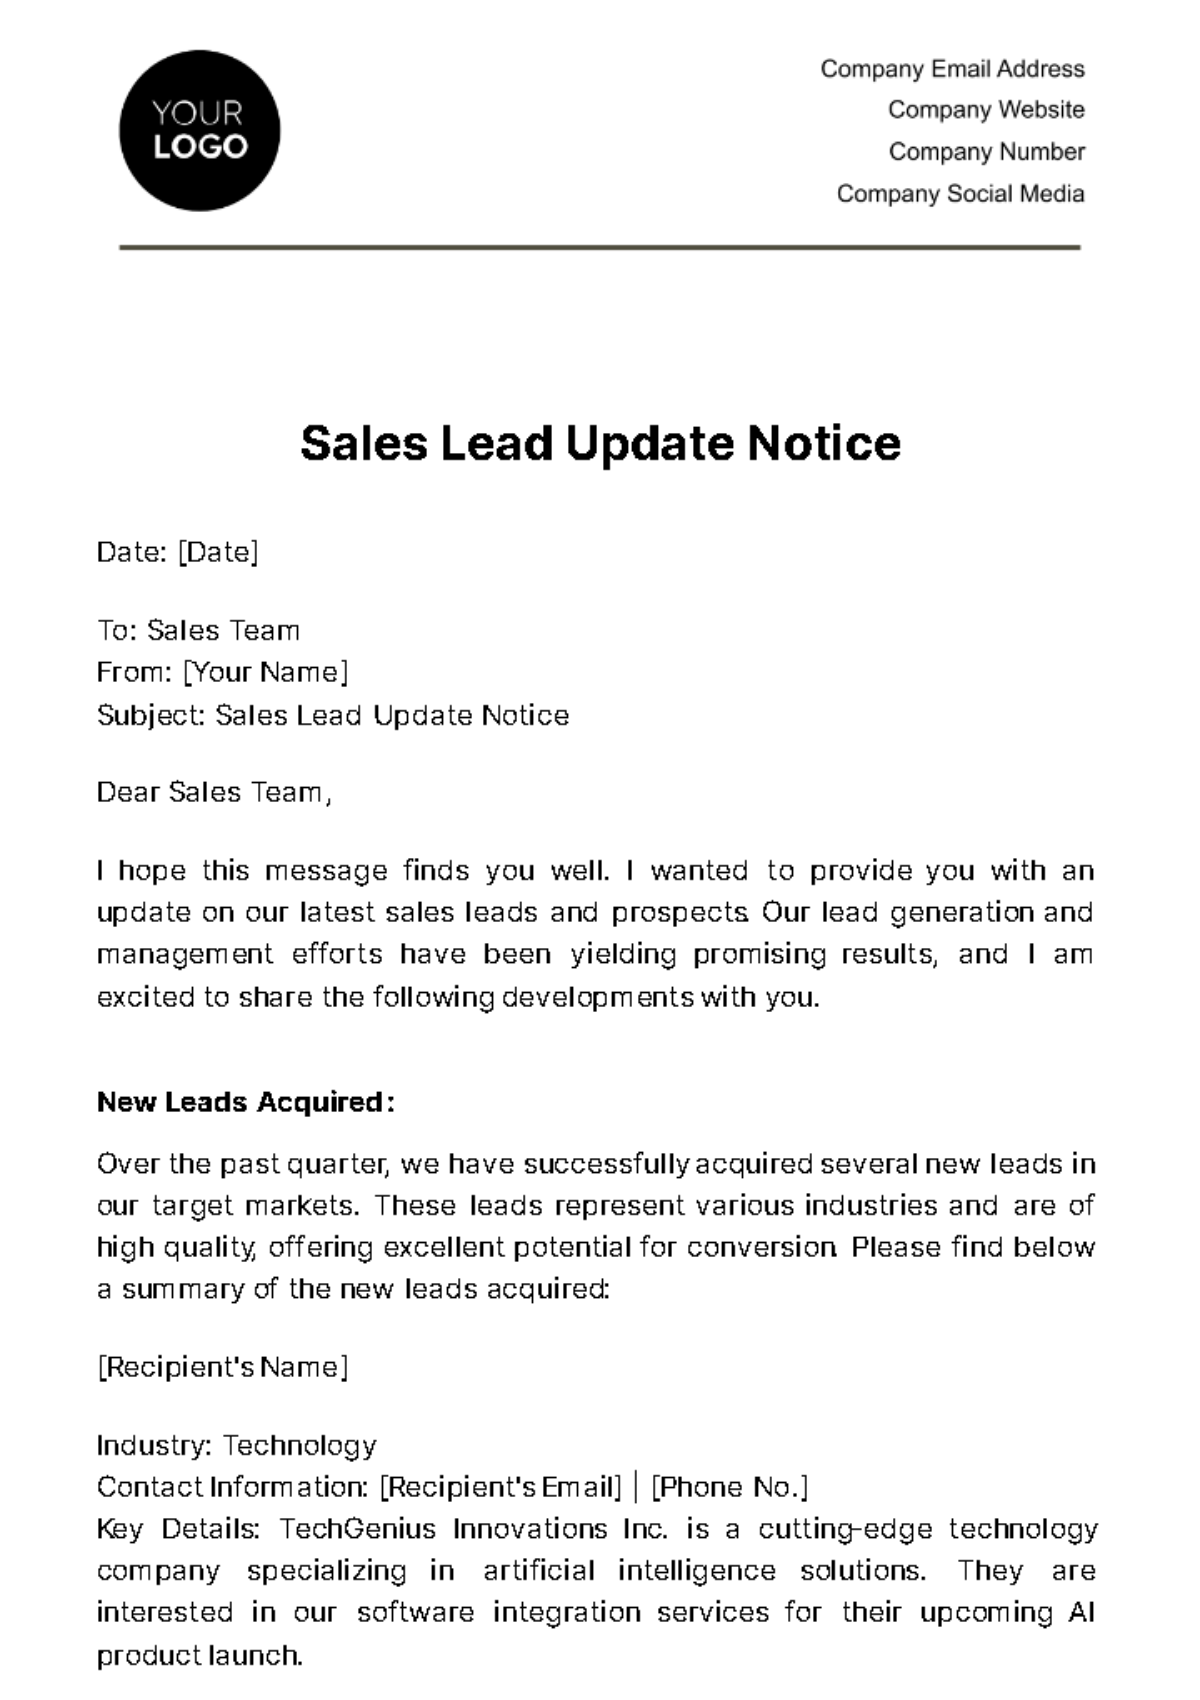 Sales Lead Update Notice Template